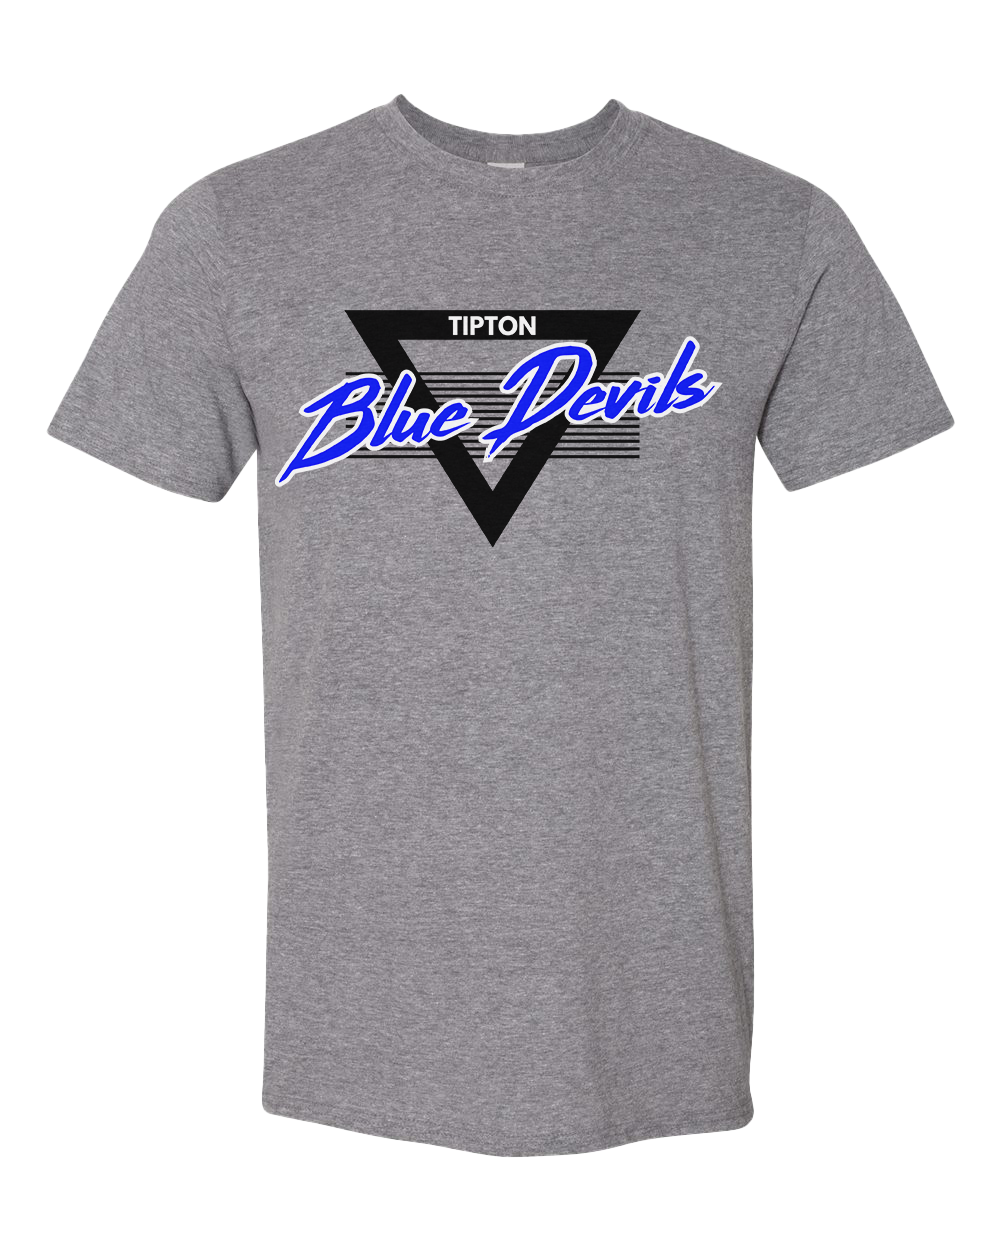 Tipton Blue Devils Retro 90s Tshirt - Graphite Heather